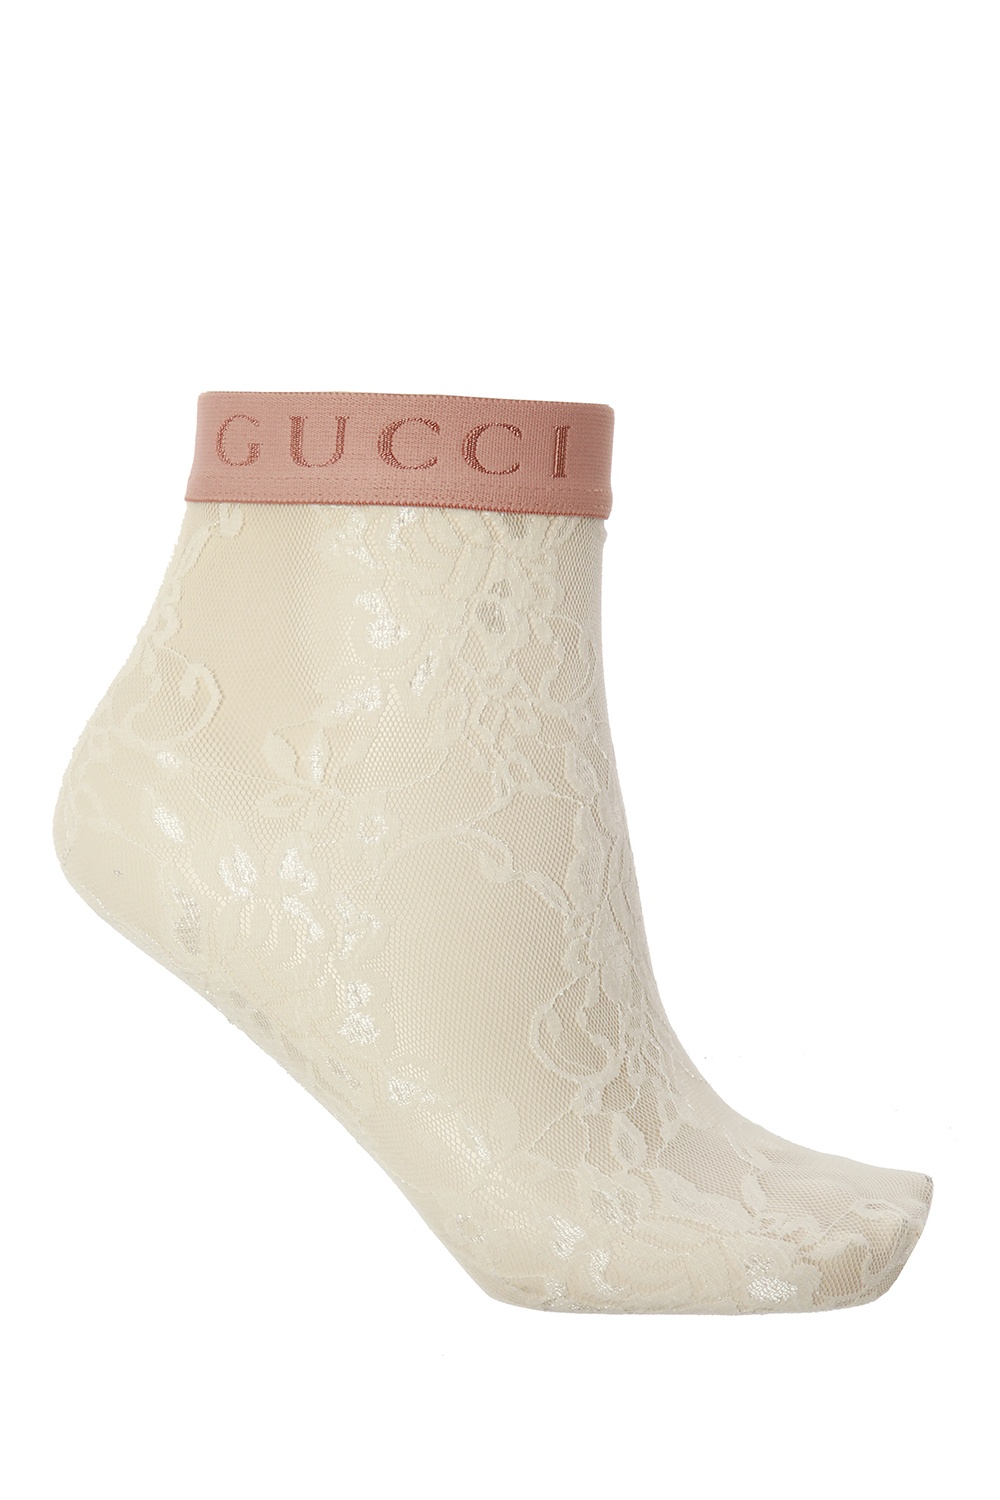 Afdæk obligatorisk Inspirere Logo socks Gucci - Vitkac US